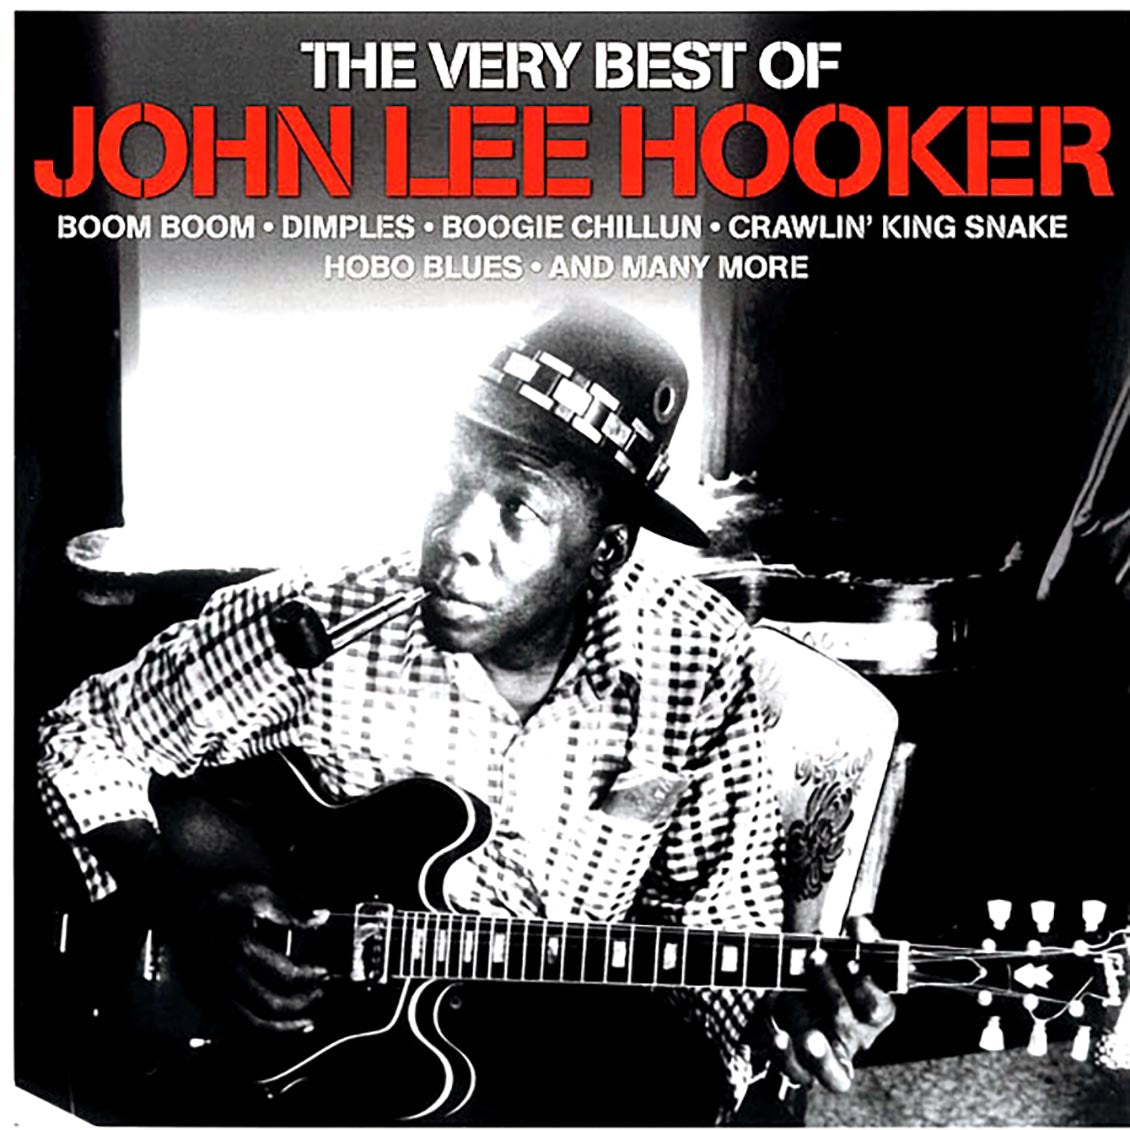 John Lee Hooker - The Very Best of John Lee Hooker (Vinyl LP)